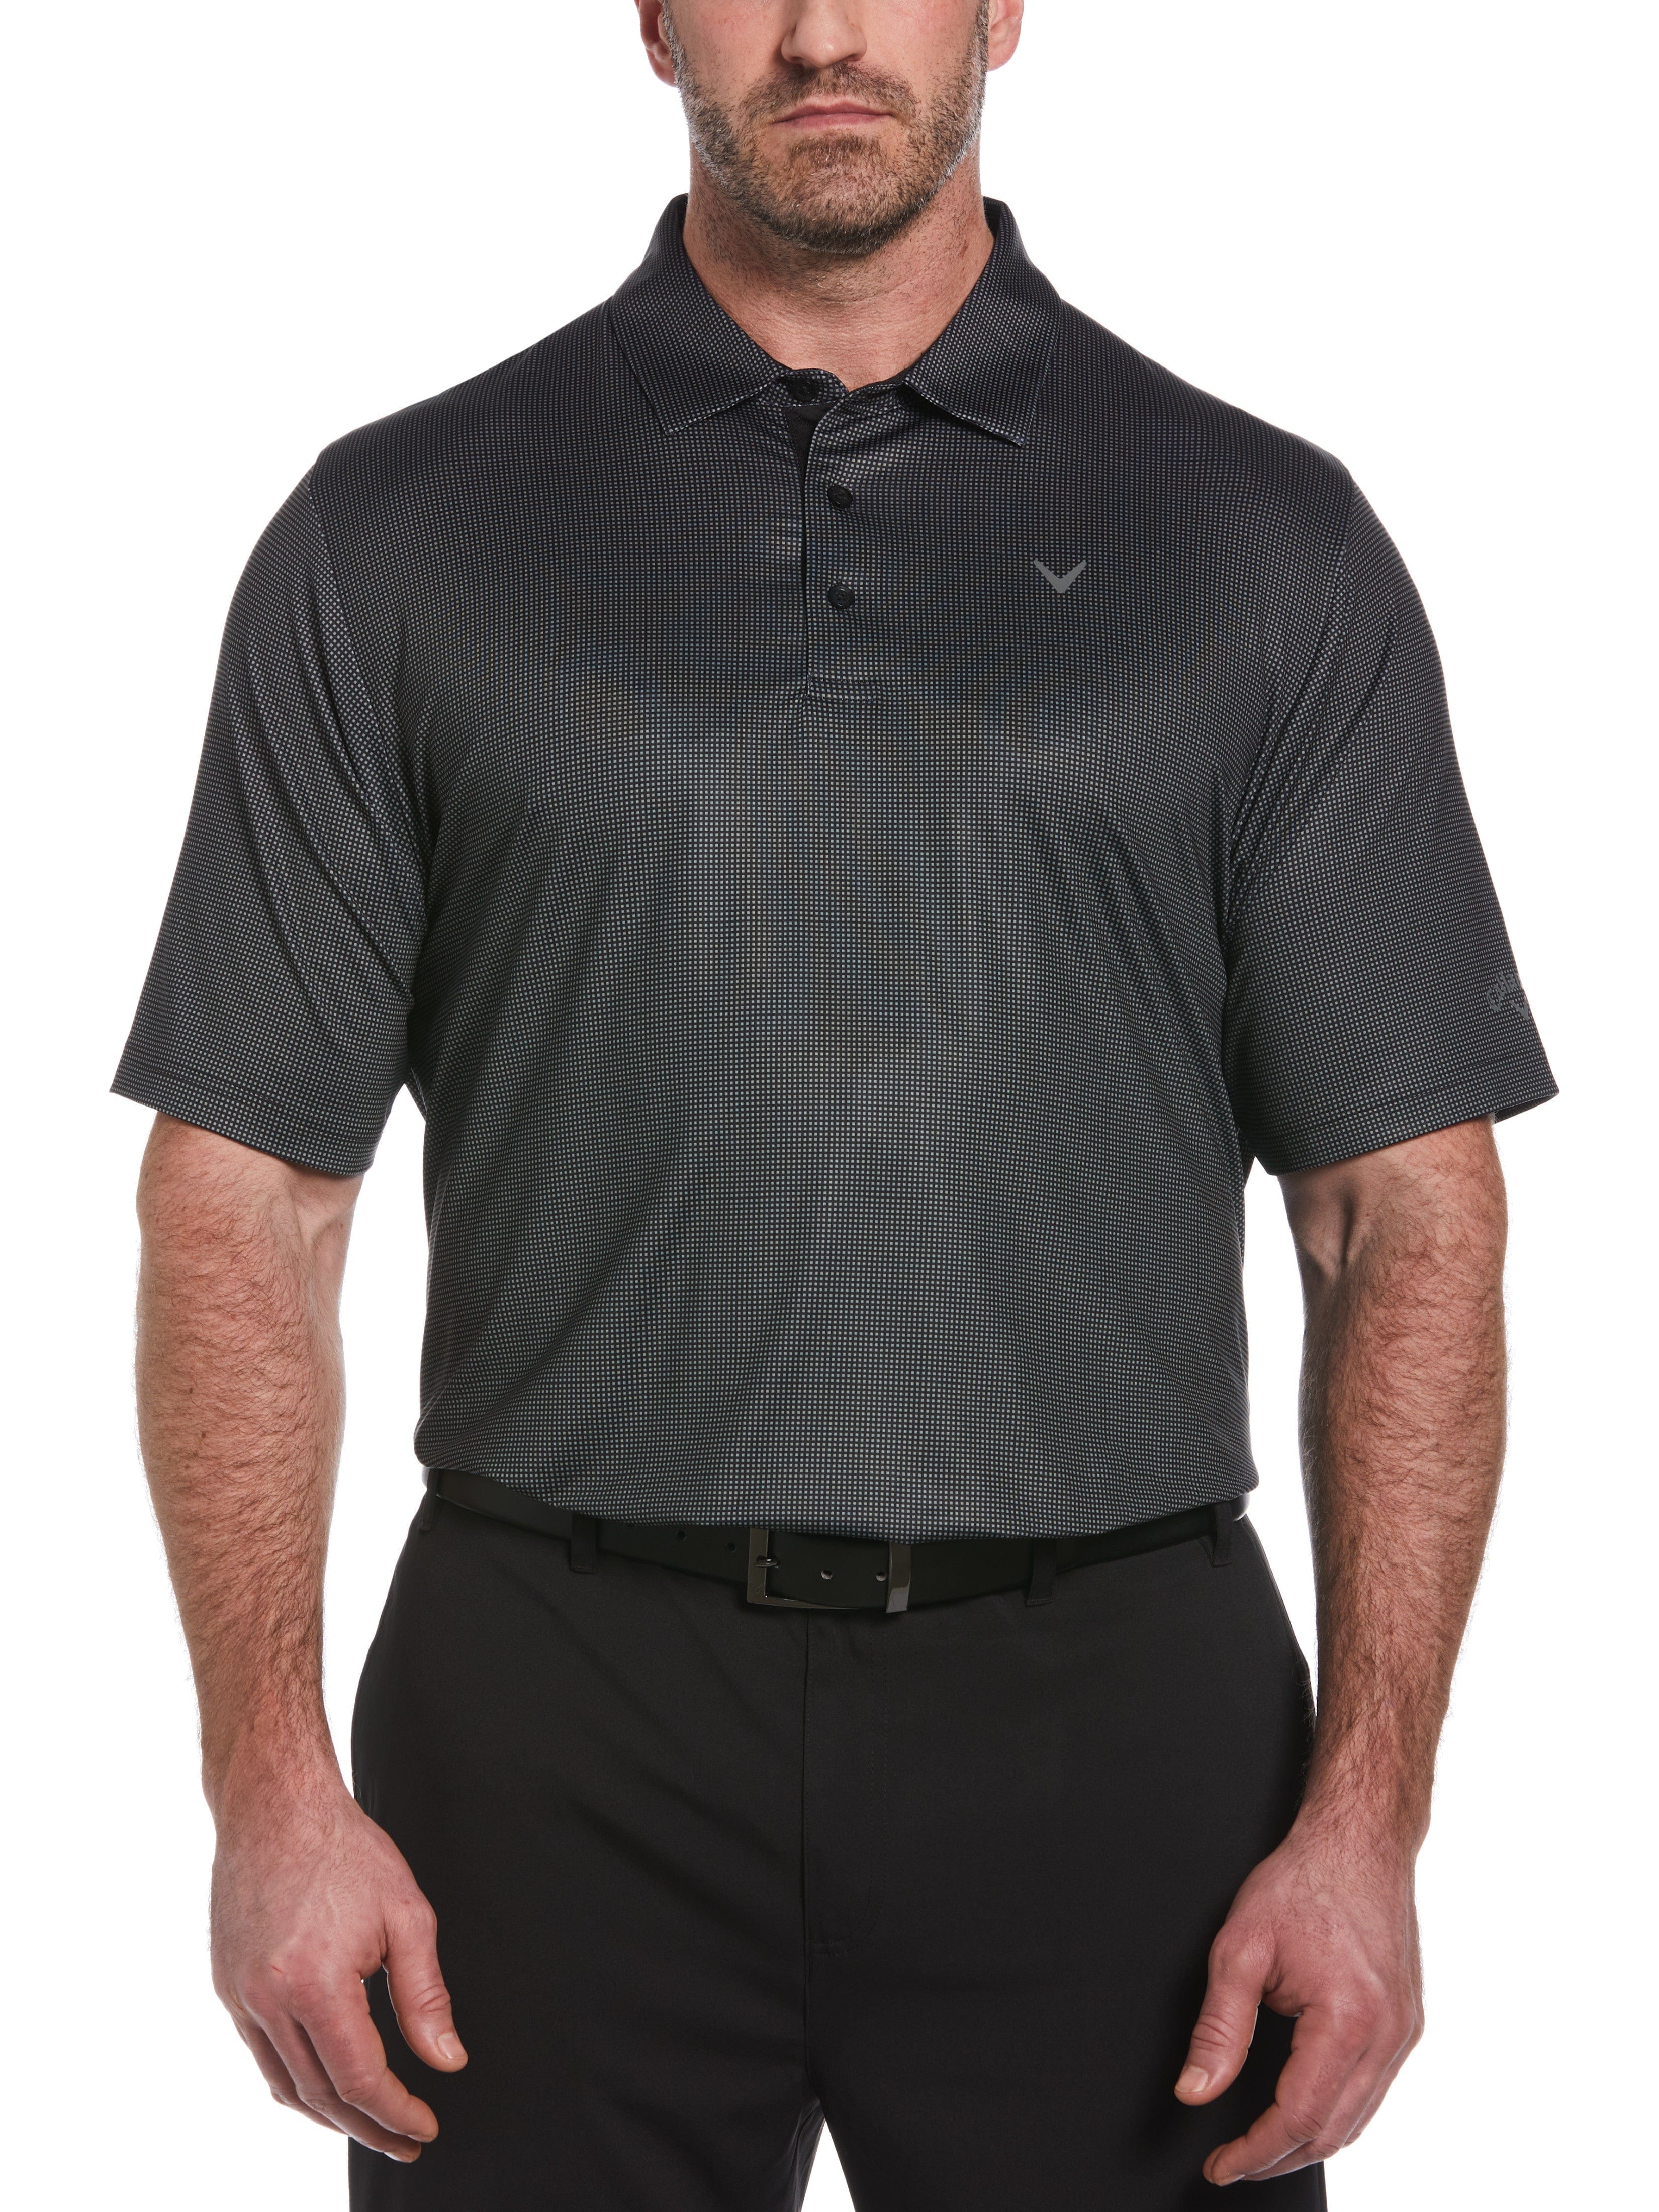 Callaway Apparel Mens Big & Tall Printed Gingham Swing Tech Polo Shirt, Size 1X, Black, Polyester/Elastane | Golf Apparel Shop